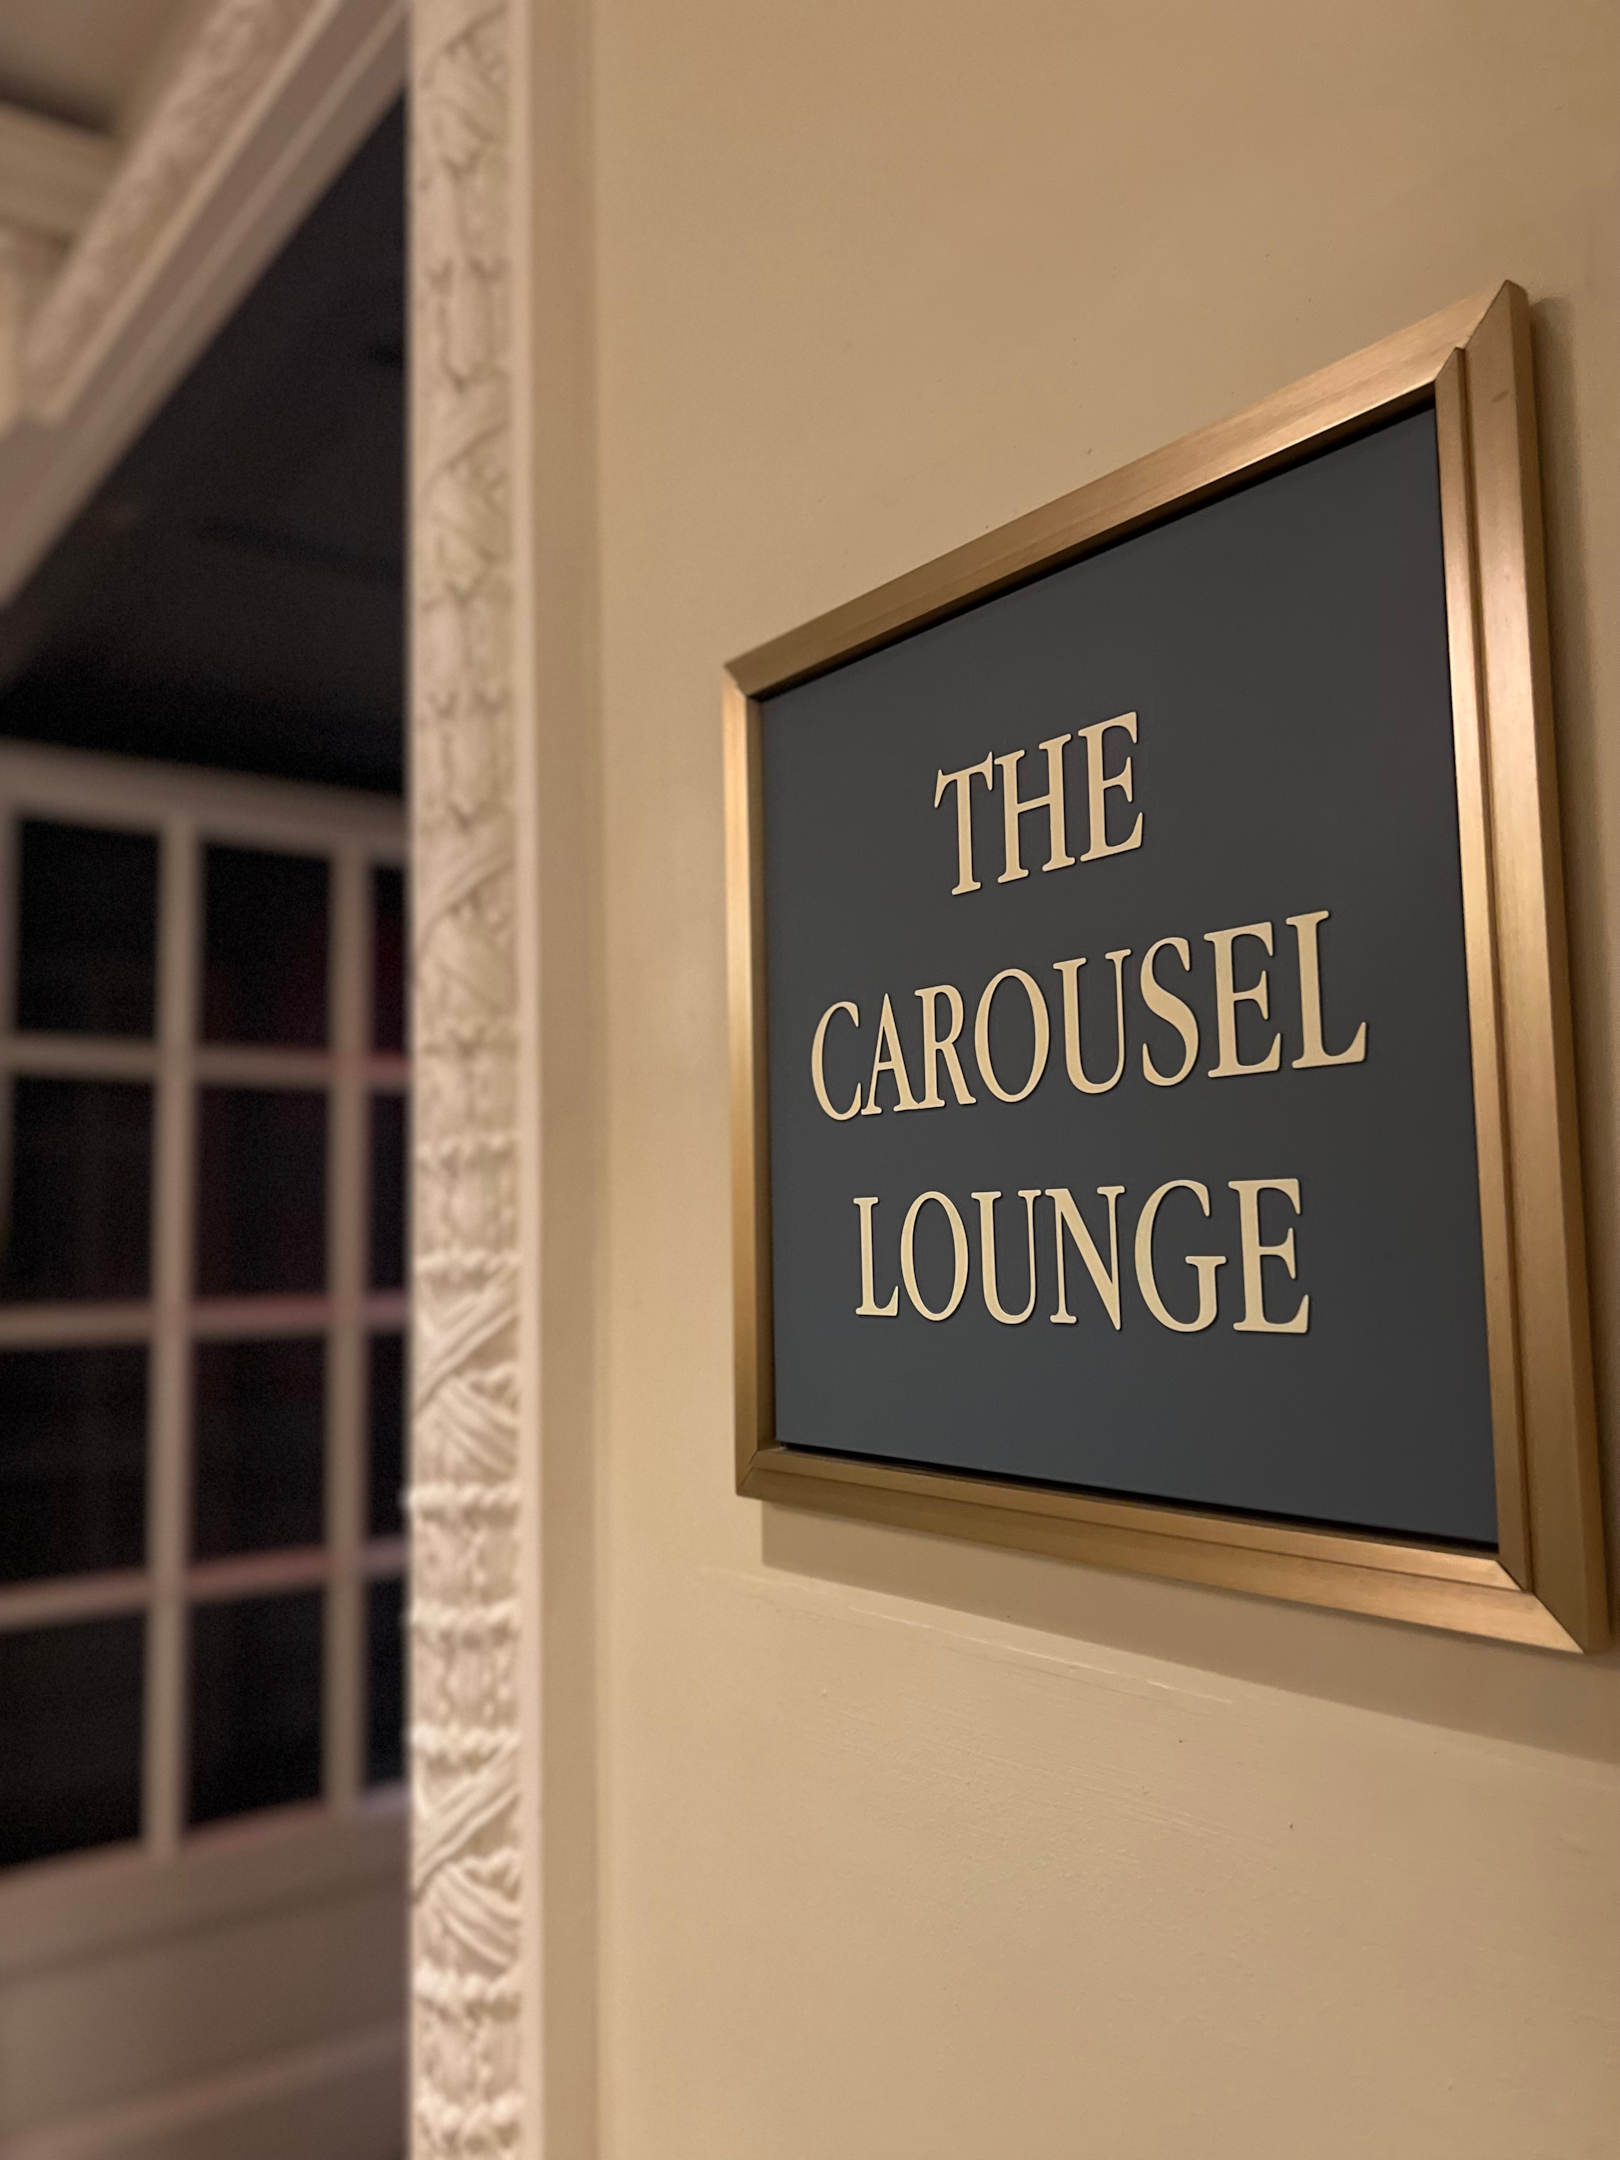 The Carousel Lounge